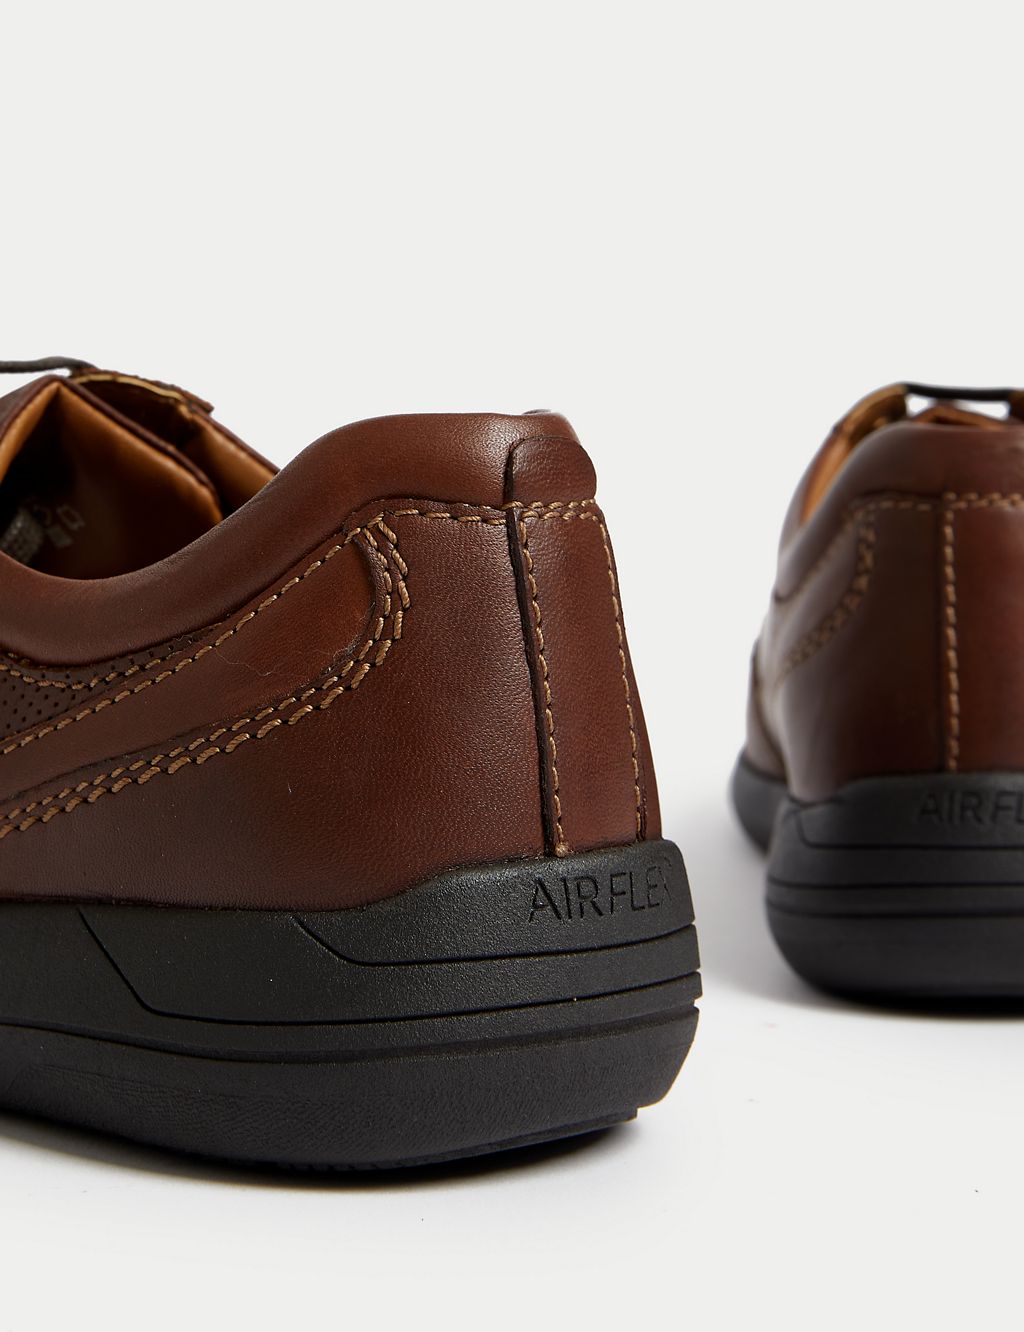 Wide Fit Airflex™ Leather Derby Shoes | M&S Collection | M&S